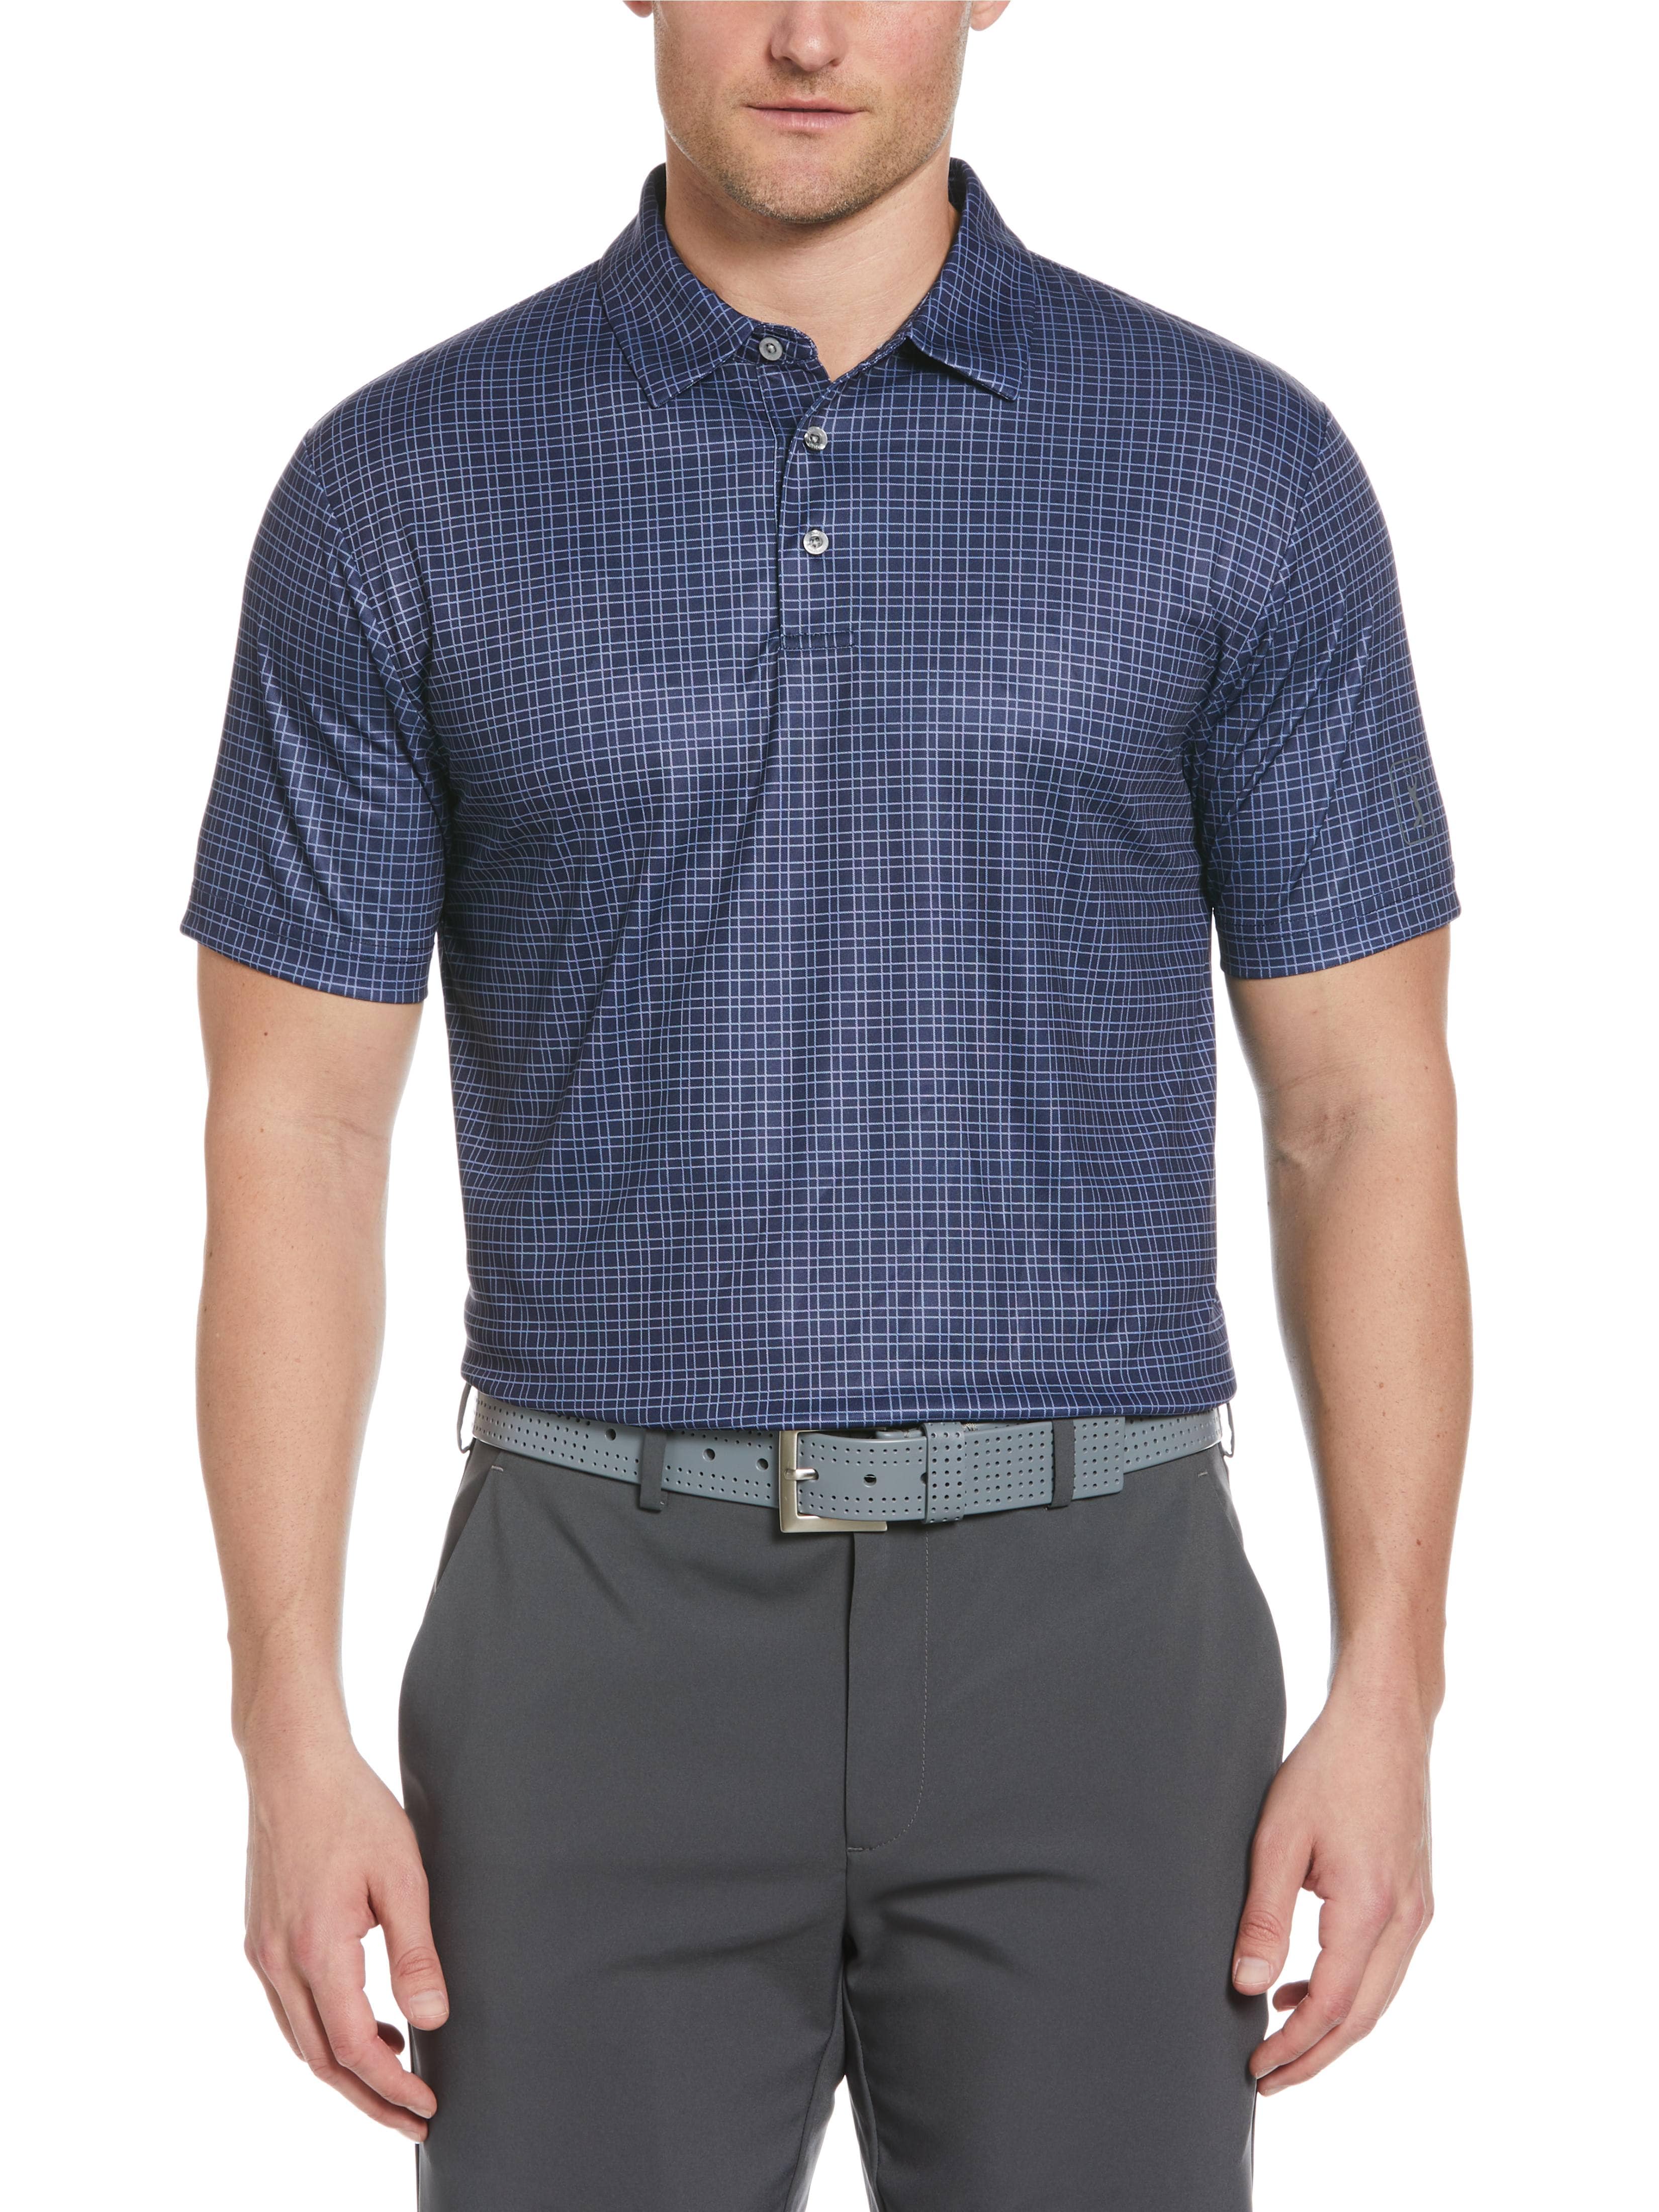 PGA TOUR Apparel Mens Menswear Print Golf Polo Shirt, Size Small, Navy Blue, 100% Polyester | Golf Apparel Shop